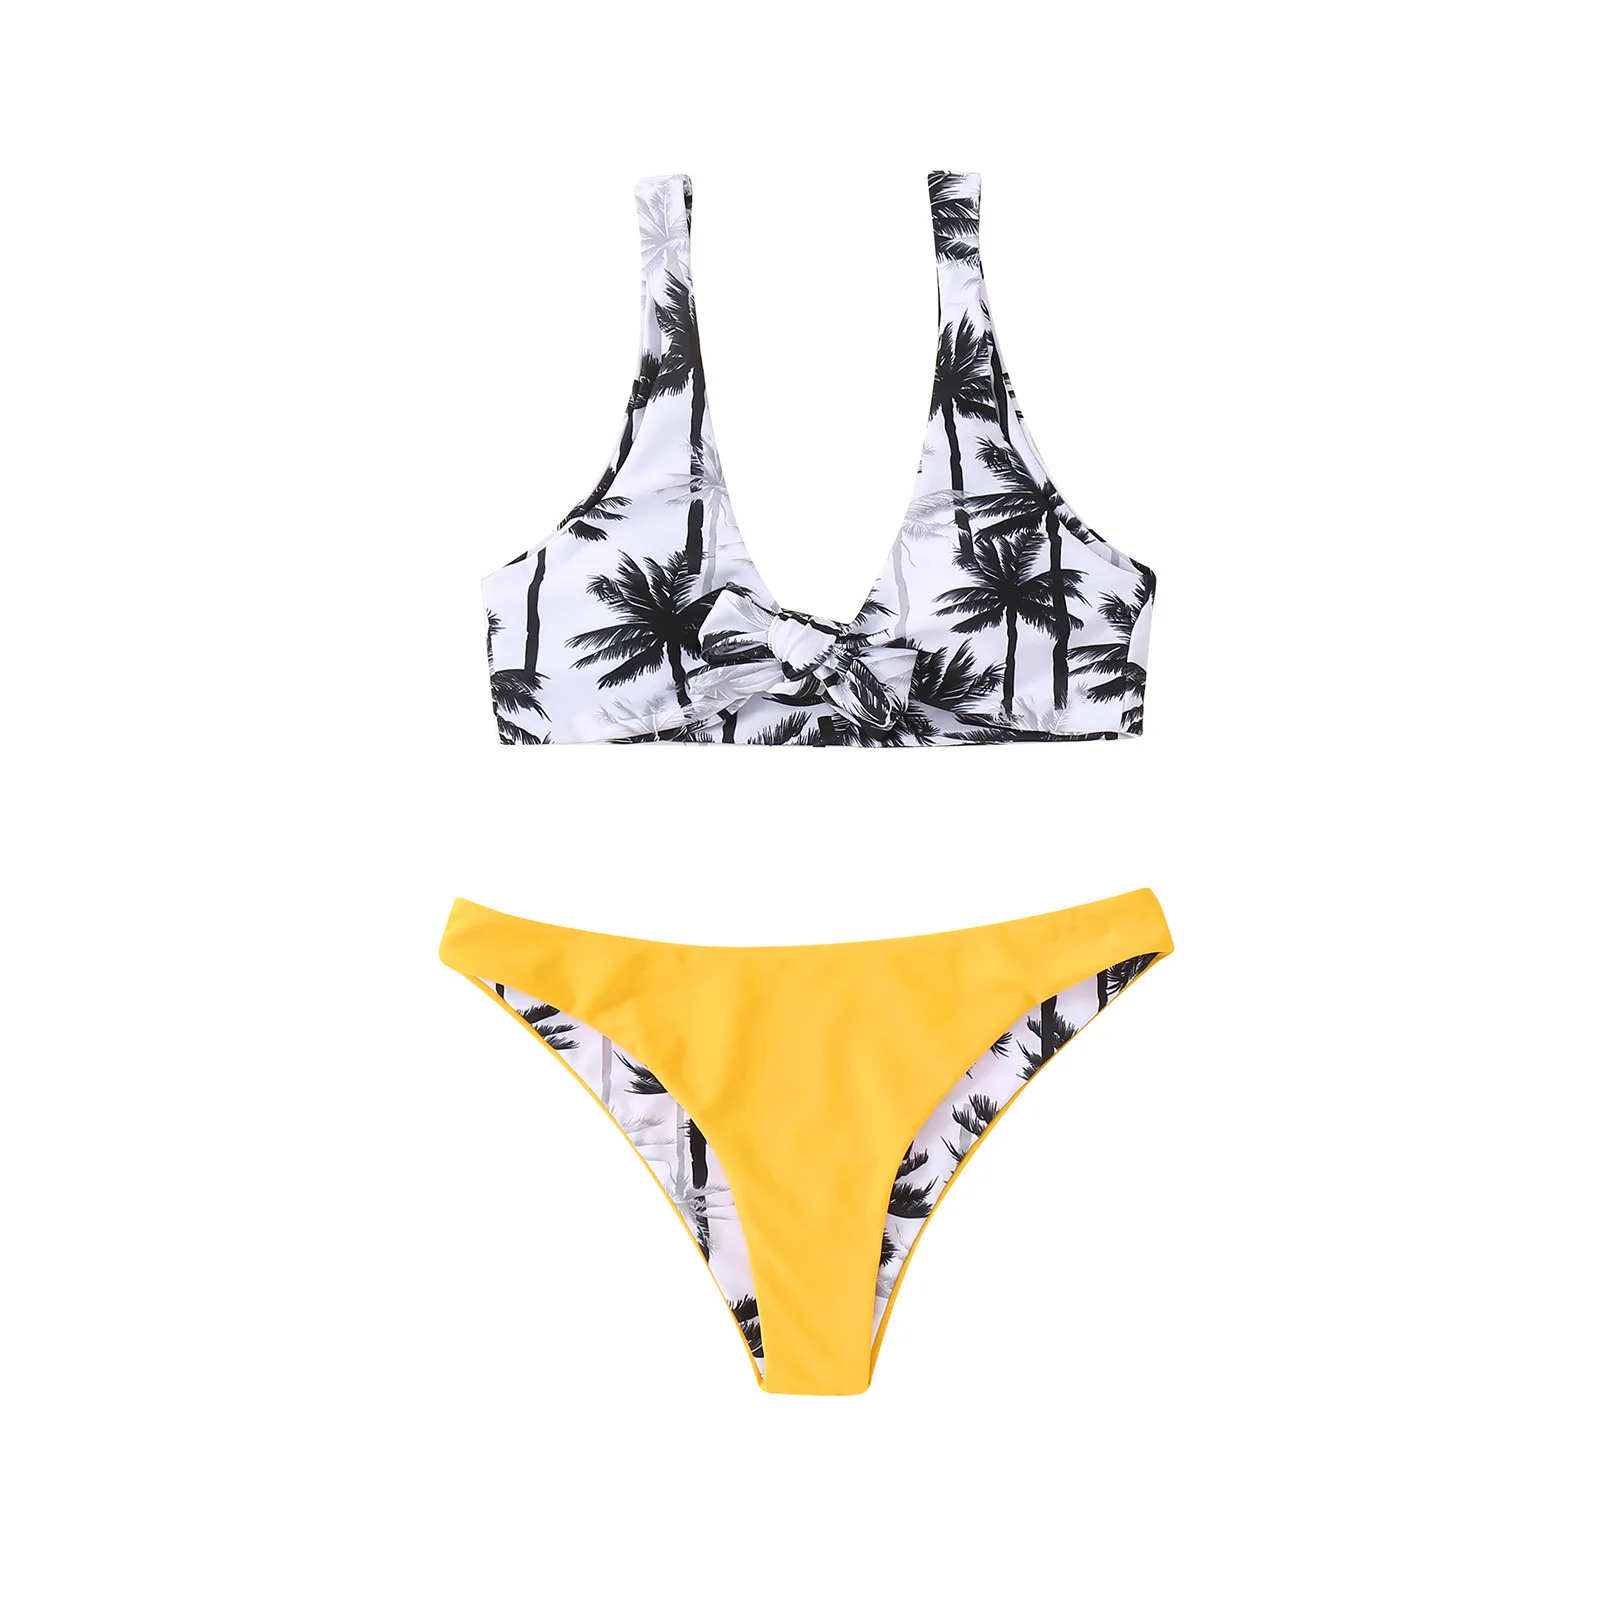 

Women Bandeau Bandage Bikini Set Push-Up Brazilian Swimwear Beachwear Swimsuit купальник женский купальник 비키니 수영복 biquini